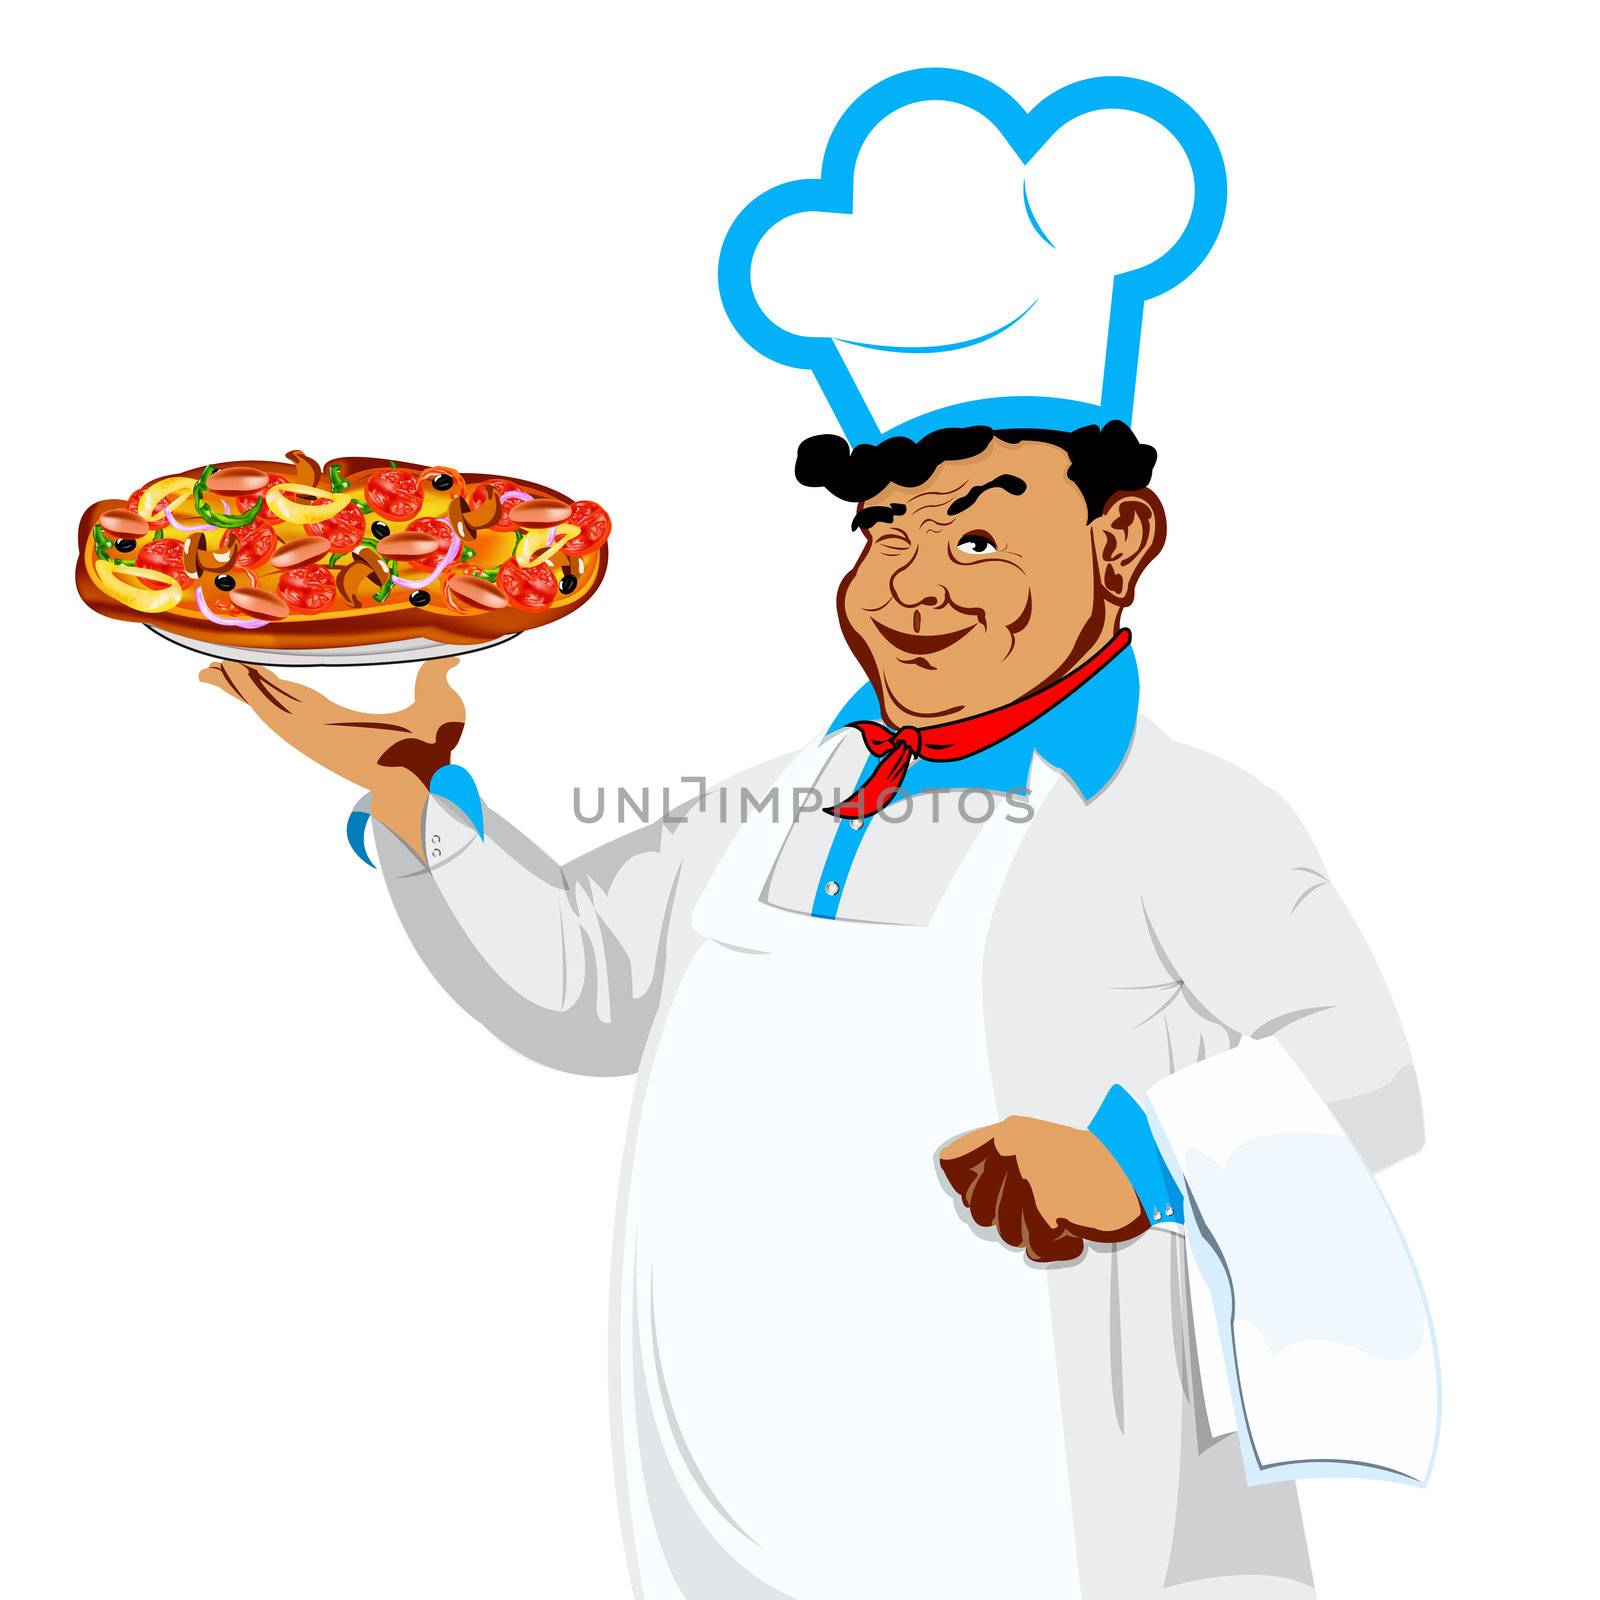 Funny Chef and italian pizza